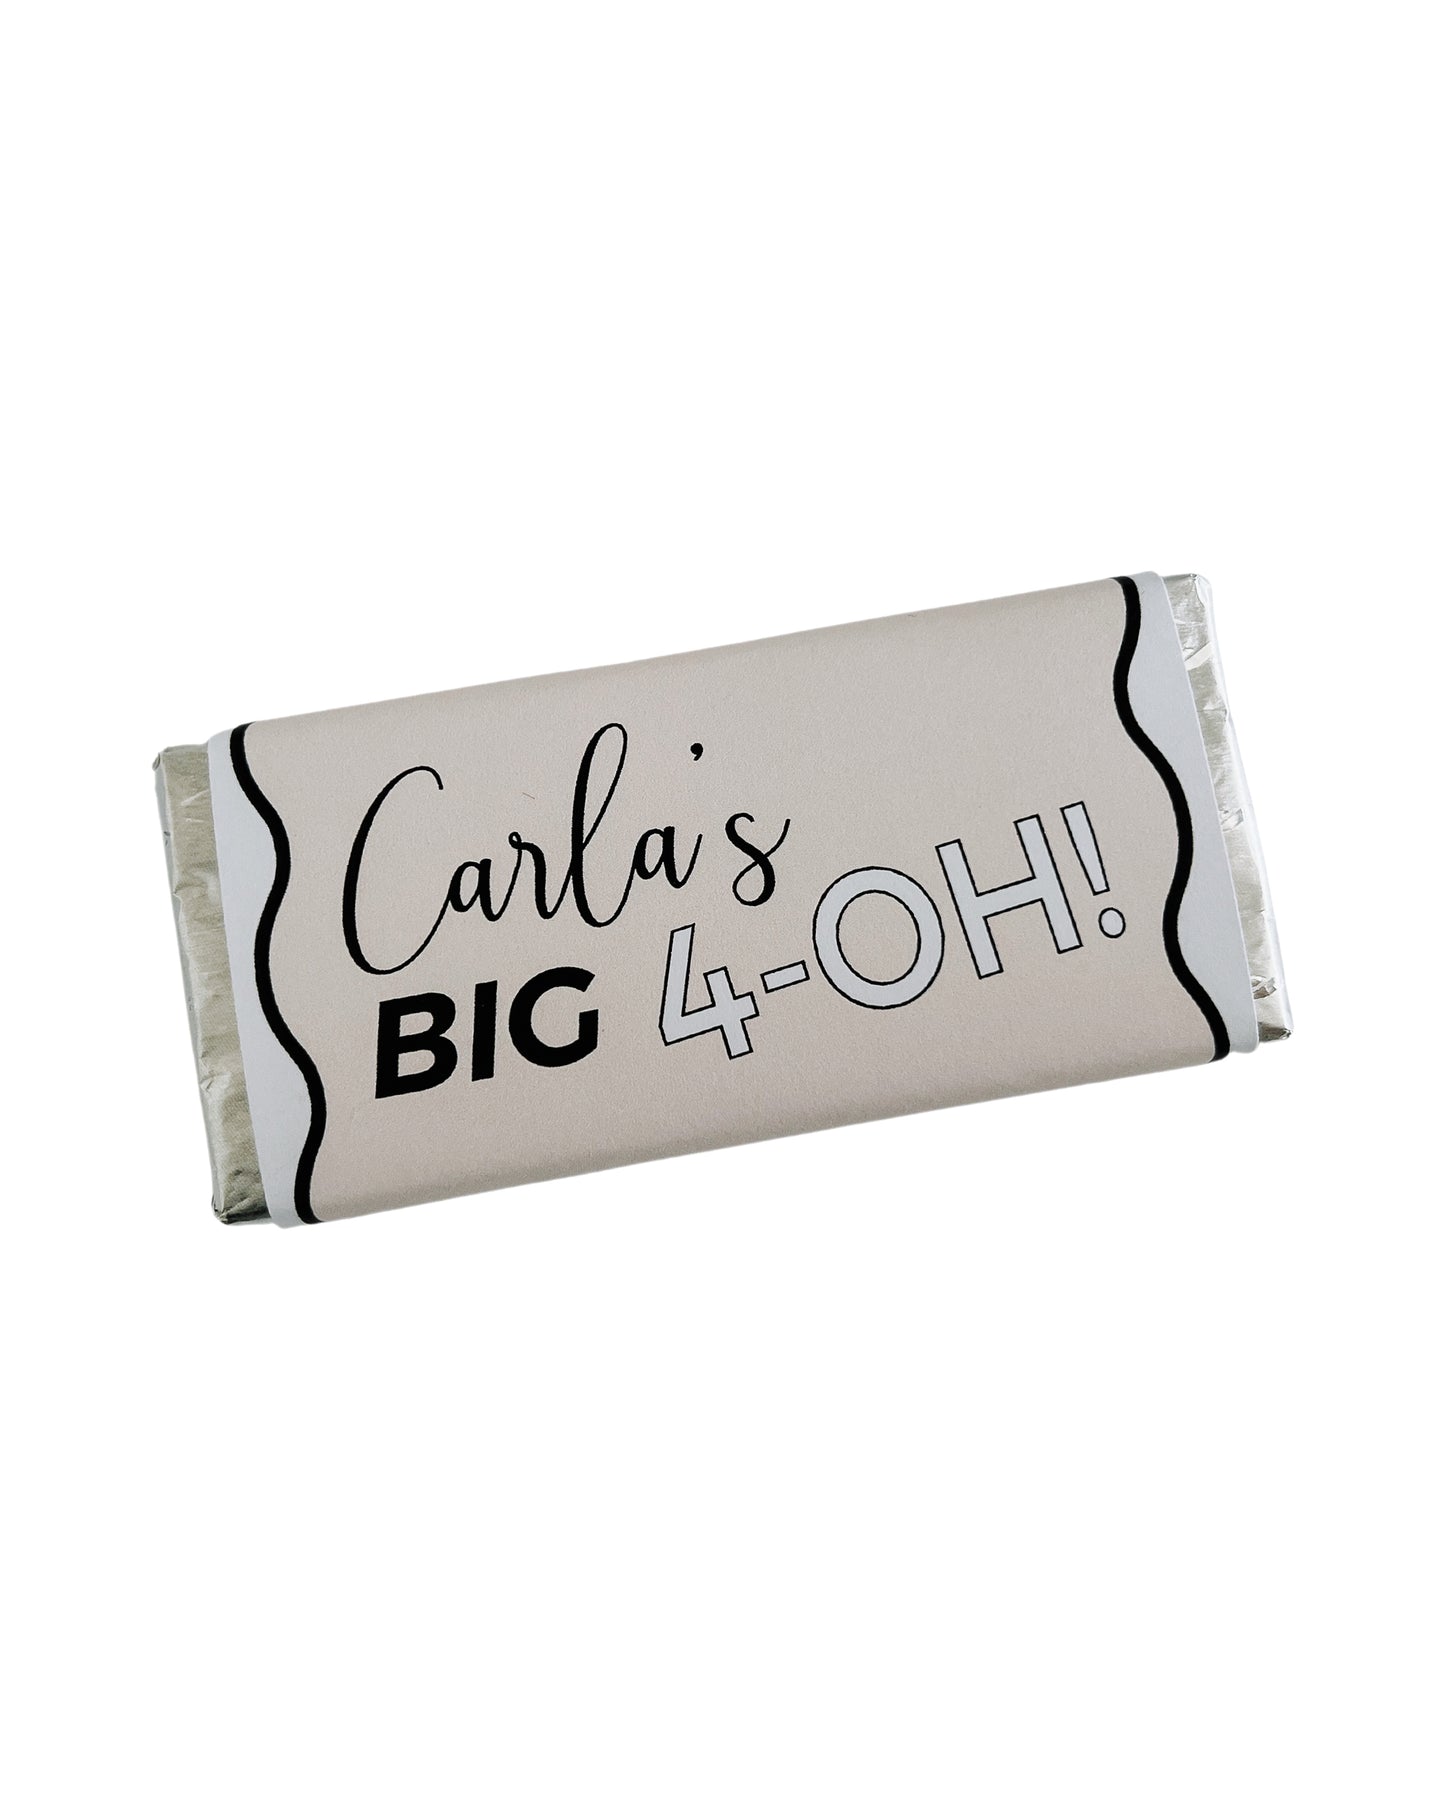 Carla BIG 4-0H! Chocolate Bar Bonbonniere Favour